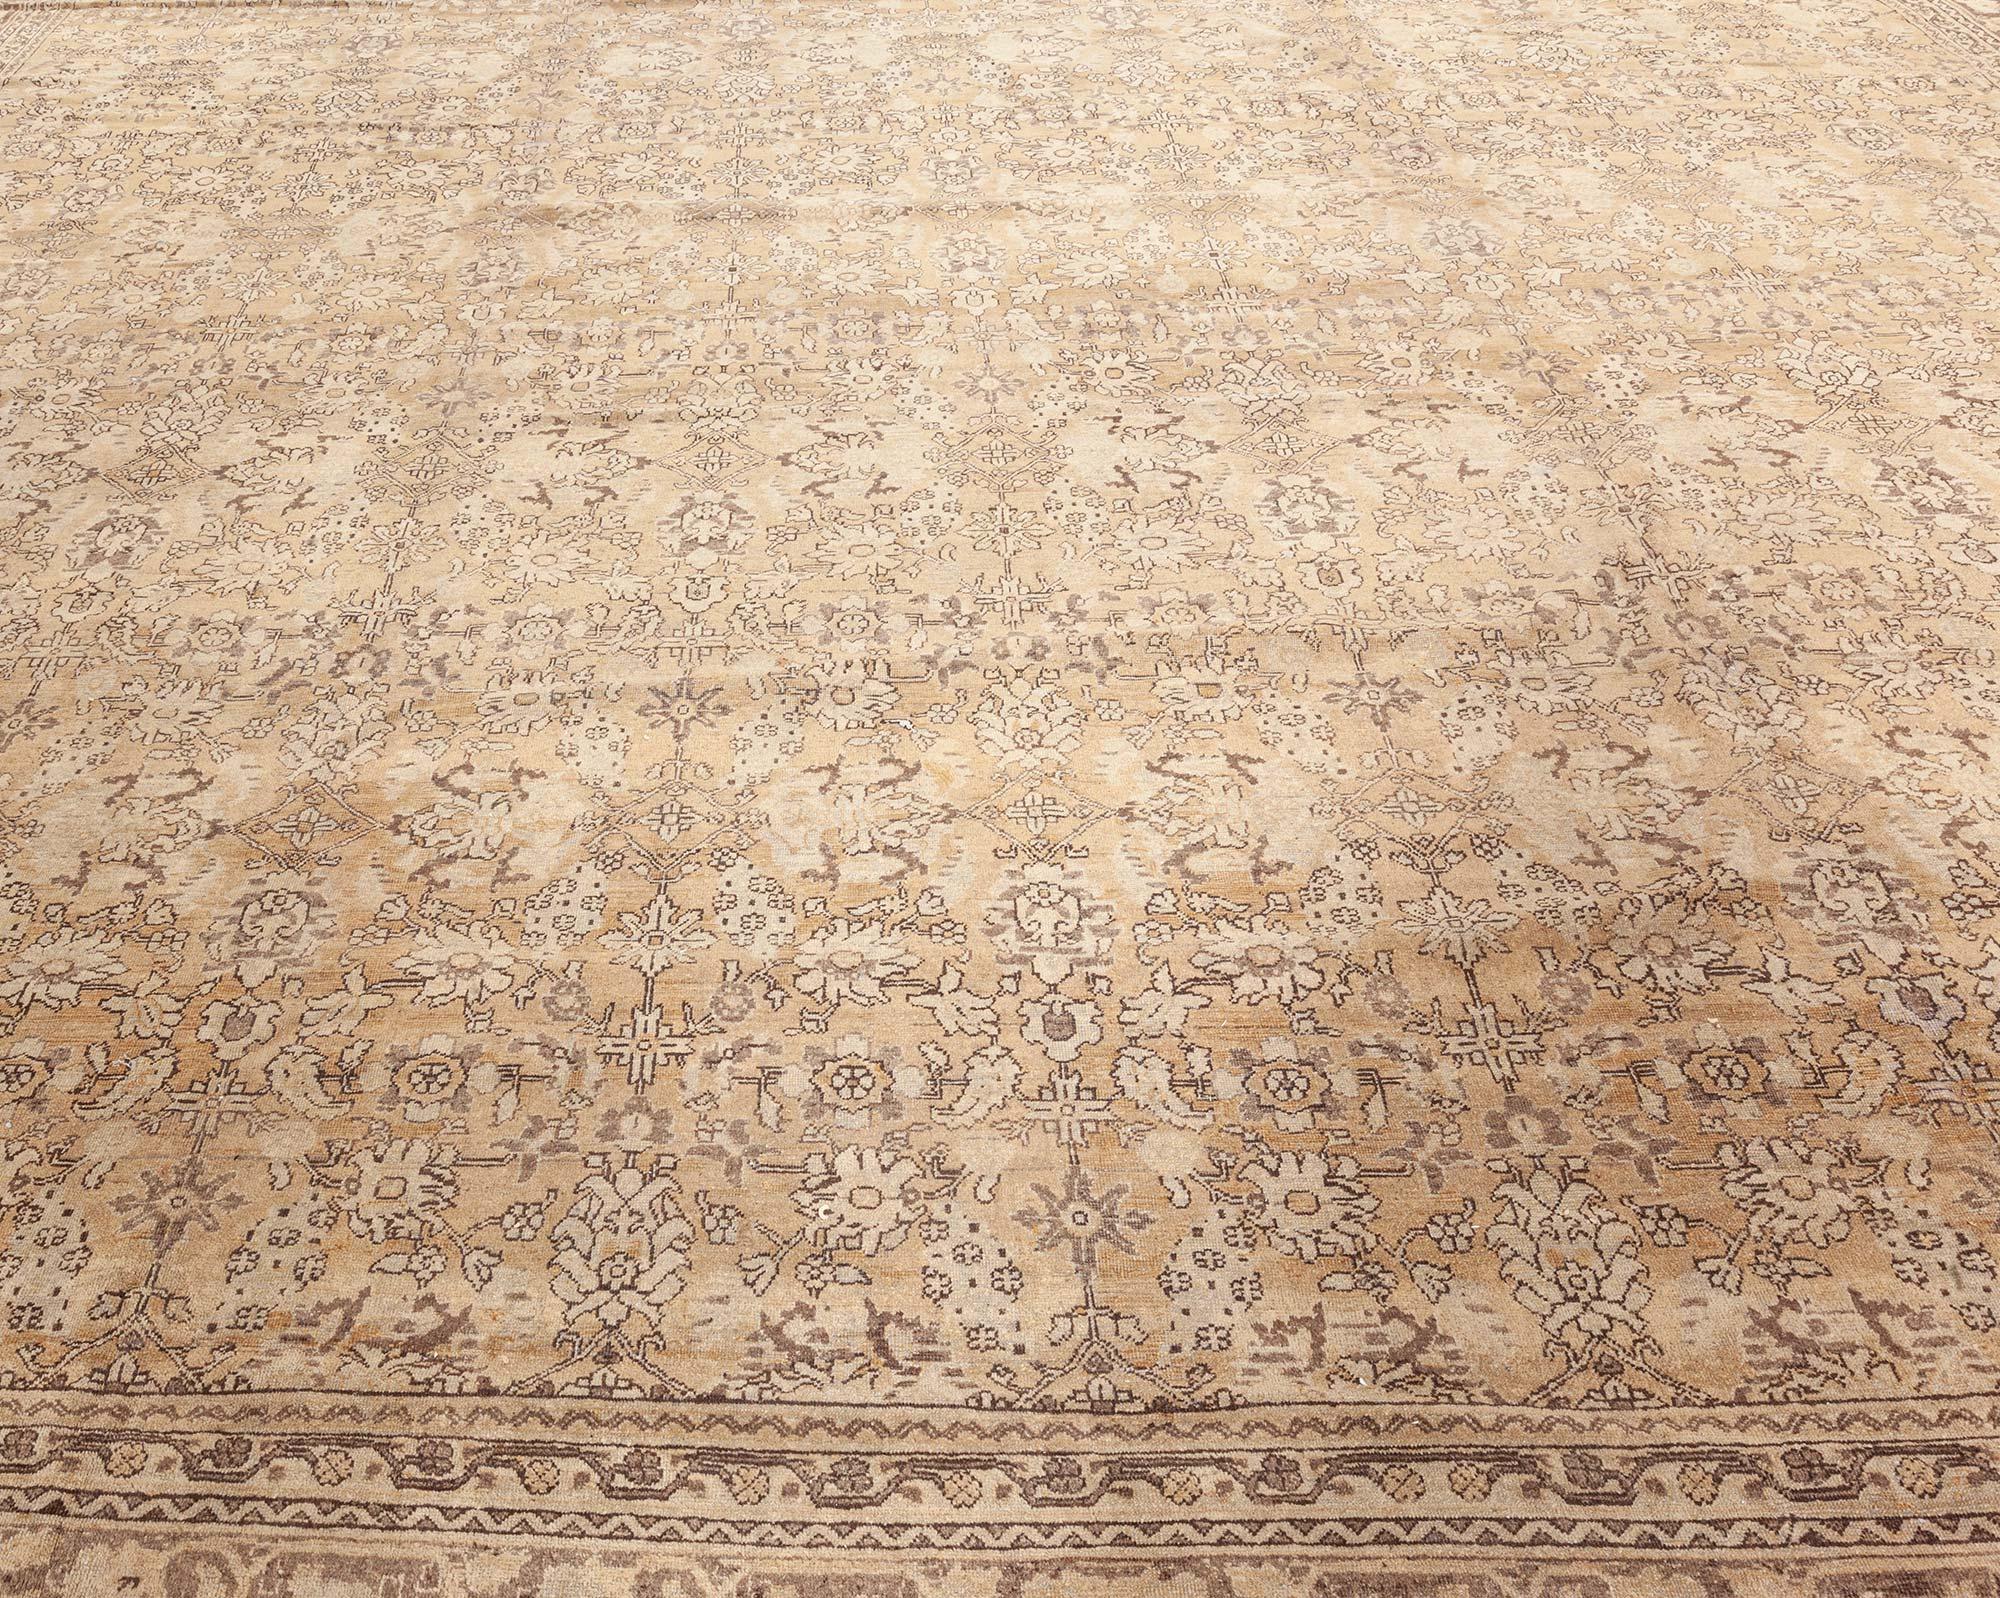 High-quality vintage Indian Amritsar handmade wool carpet
Size: 14'5